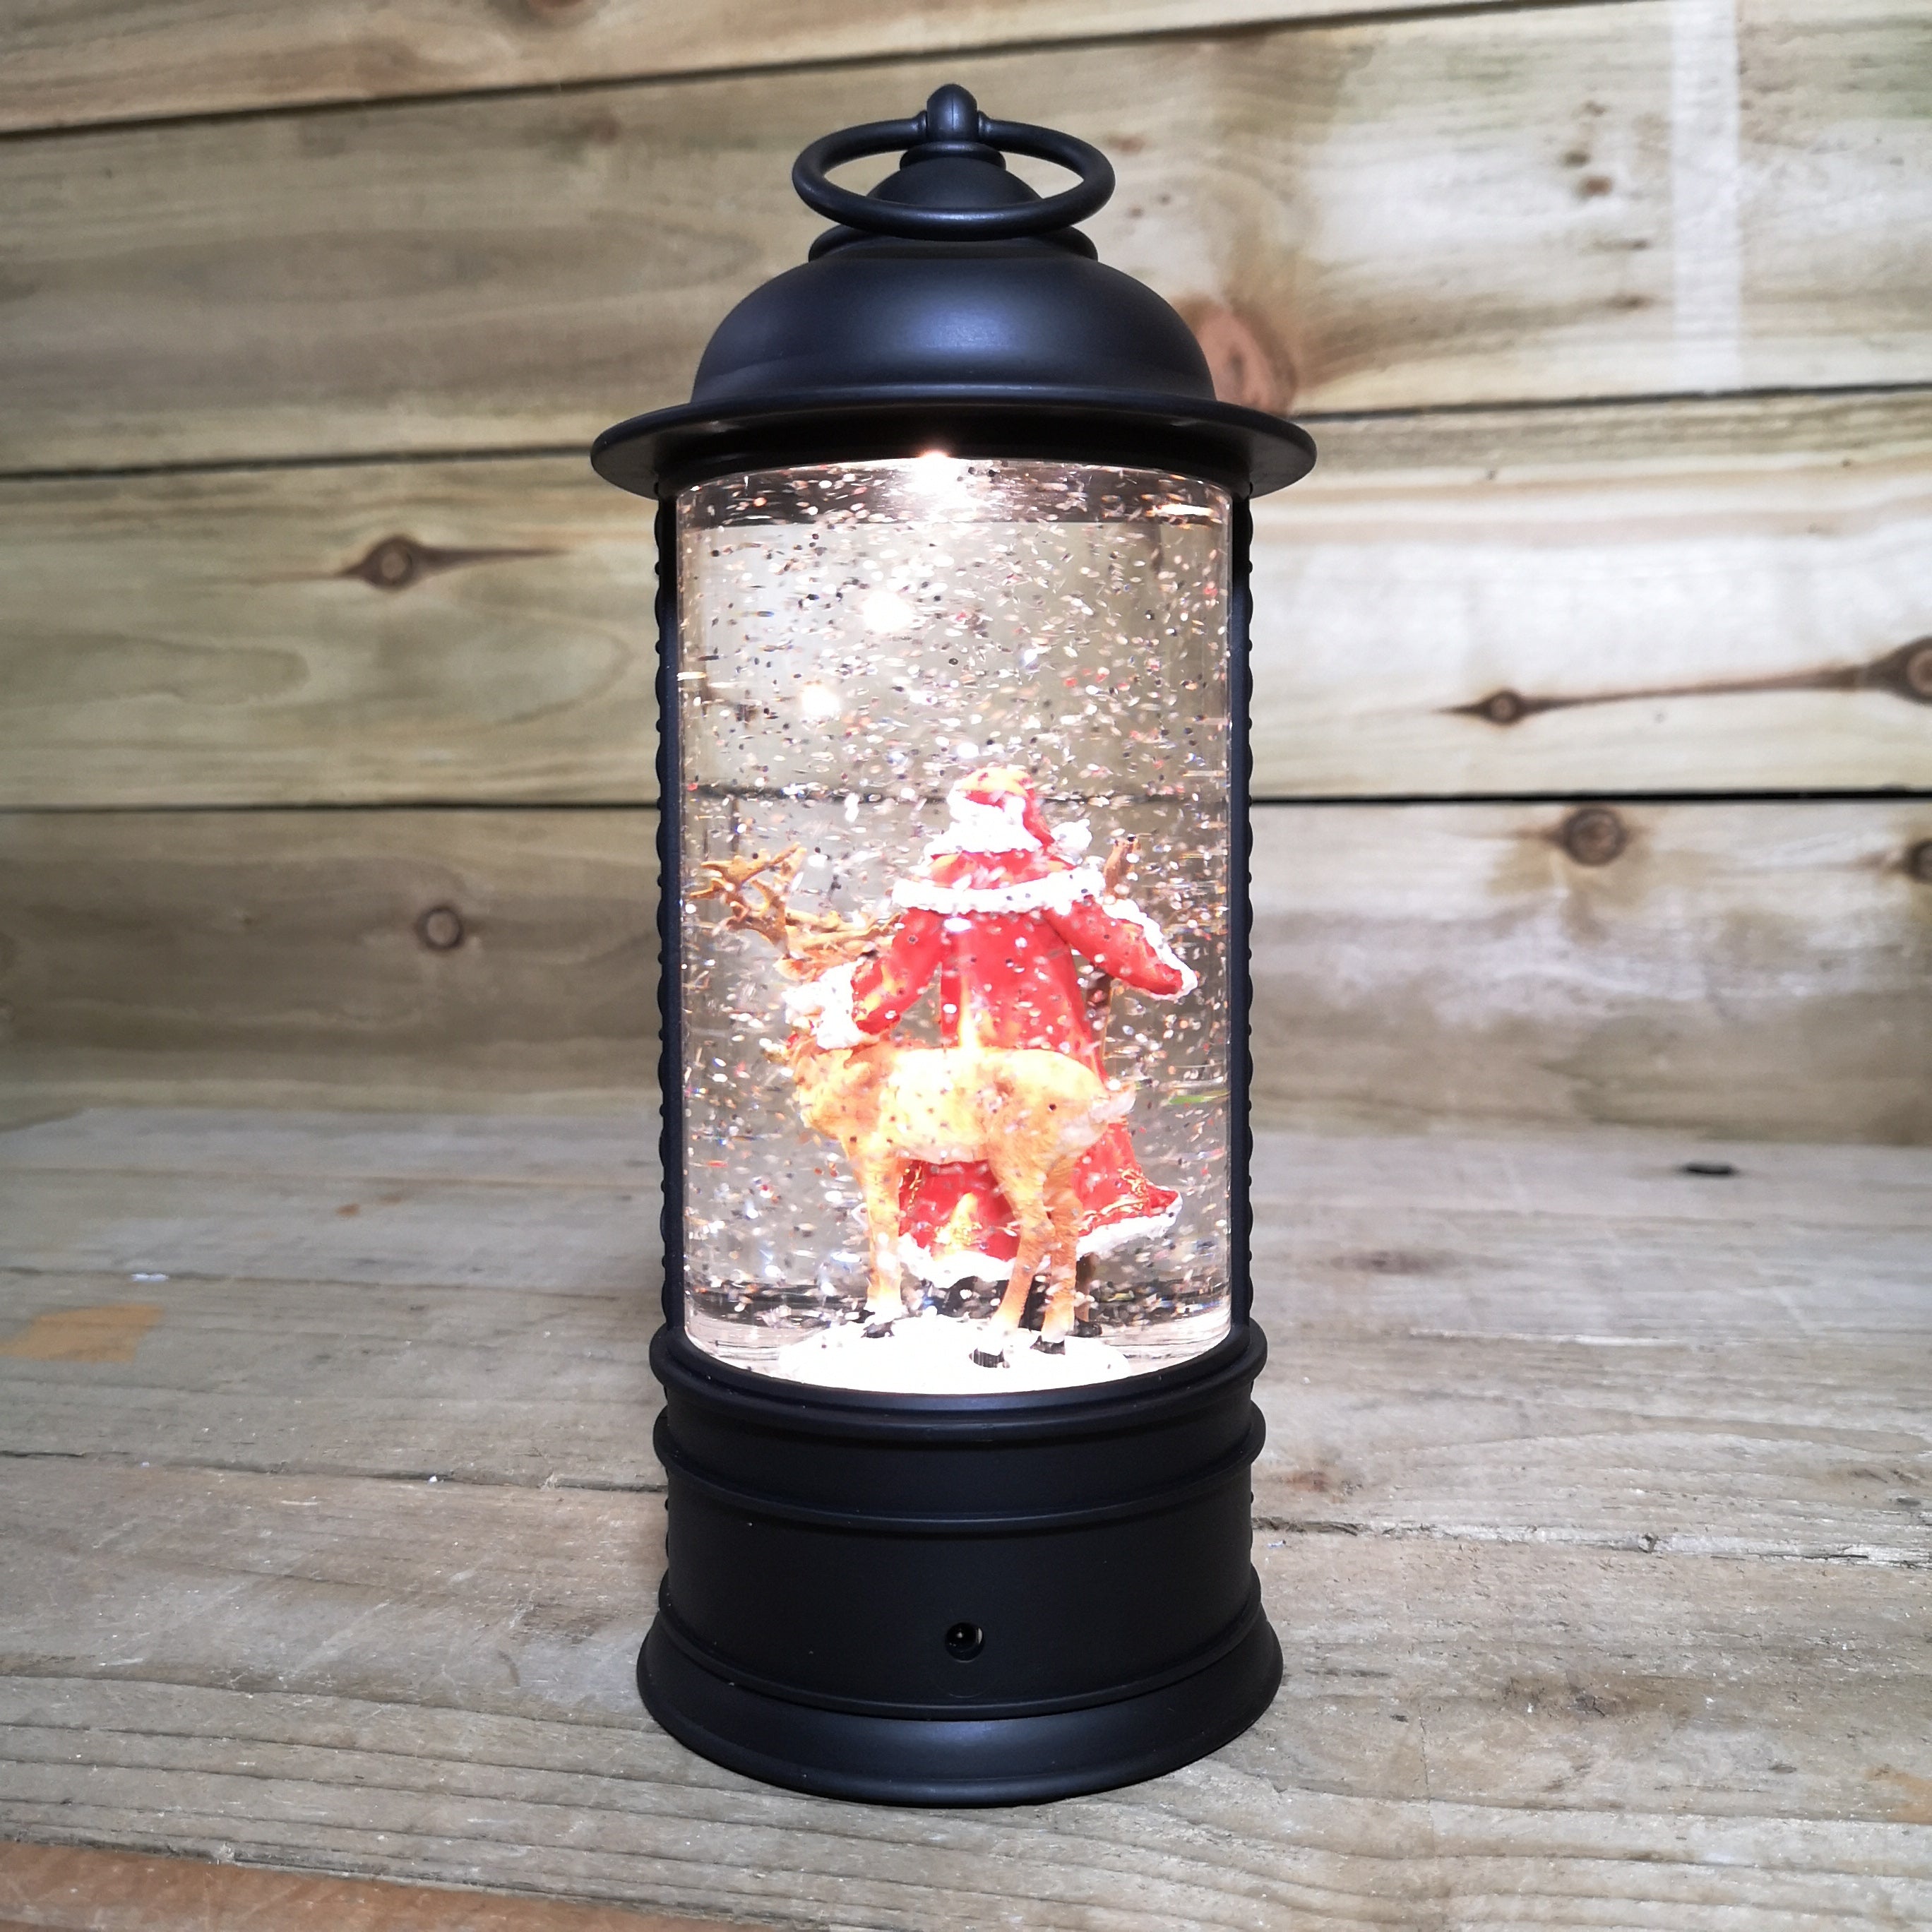 29cm Snowtime Christmas Water Spinner Antique Effect Lantern With Santa & Reindeer Scene  Dual Power